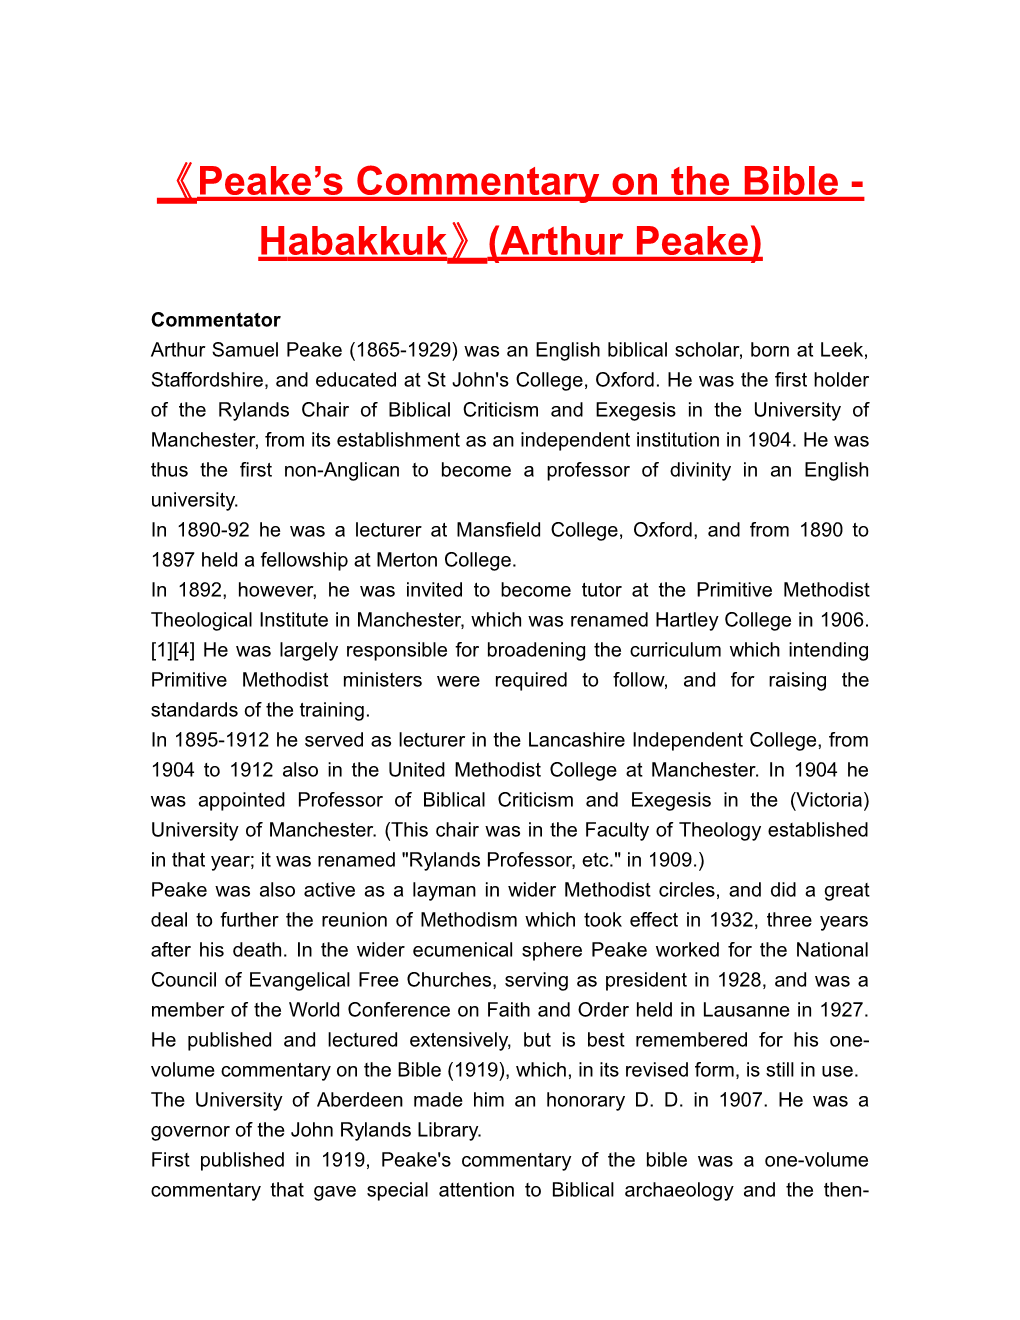 Peake S Commentary on the Bible - Habakkuk (Arthur Peake)